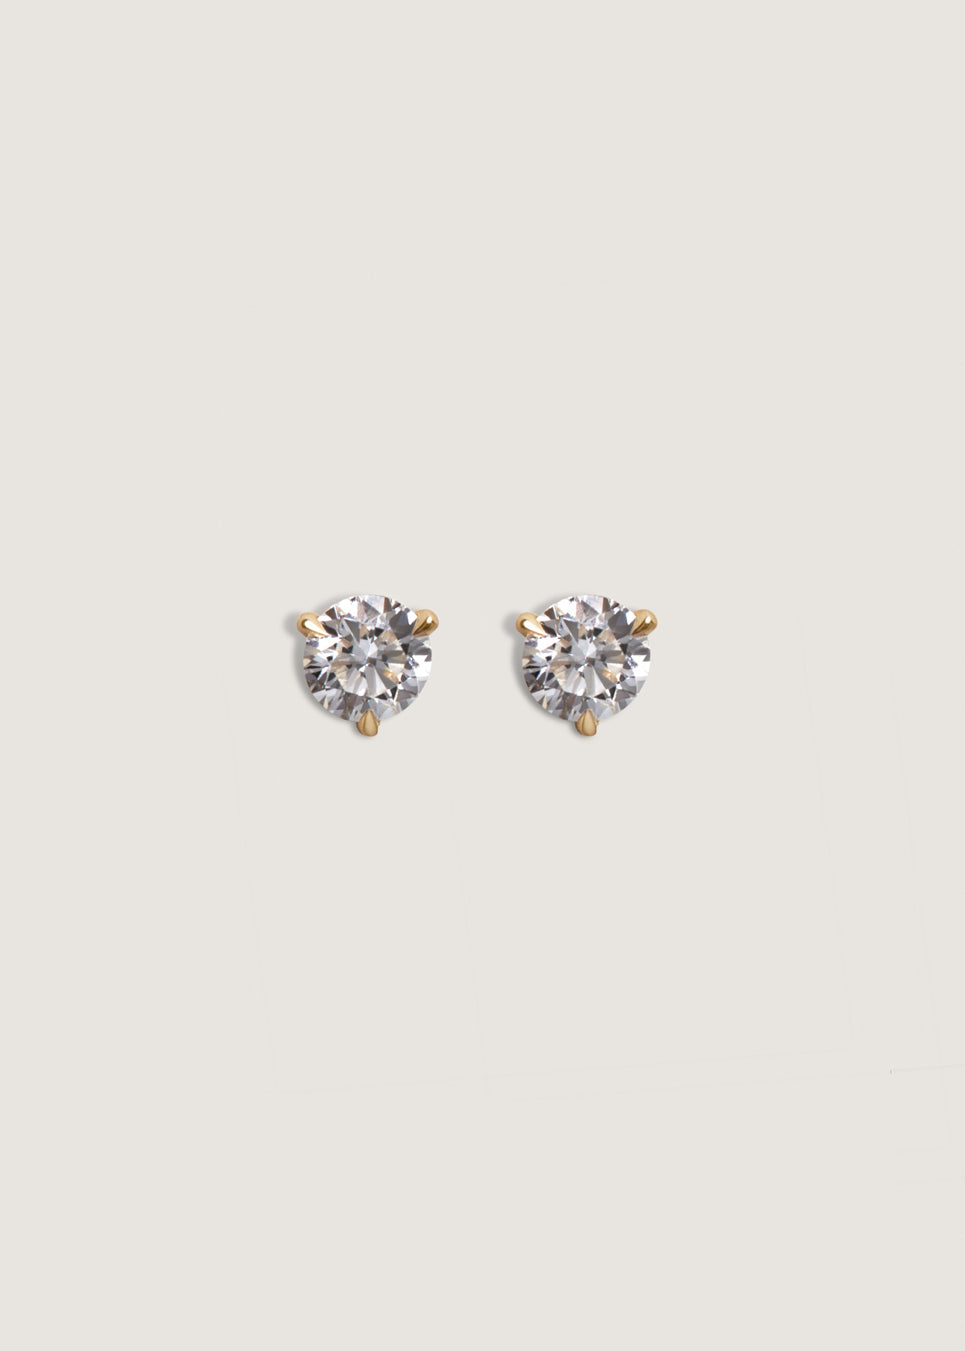 alt="June Round Diamond Stud Earrings 1ctw"